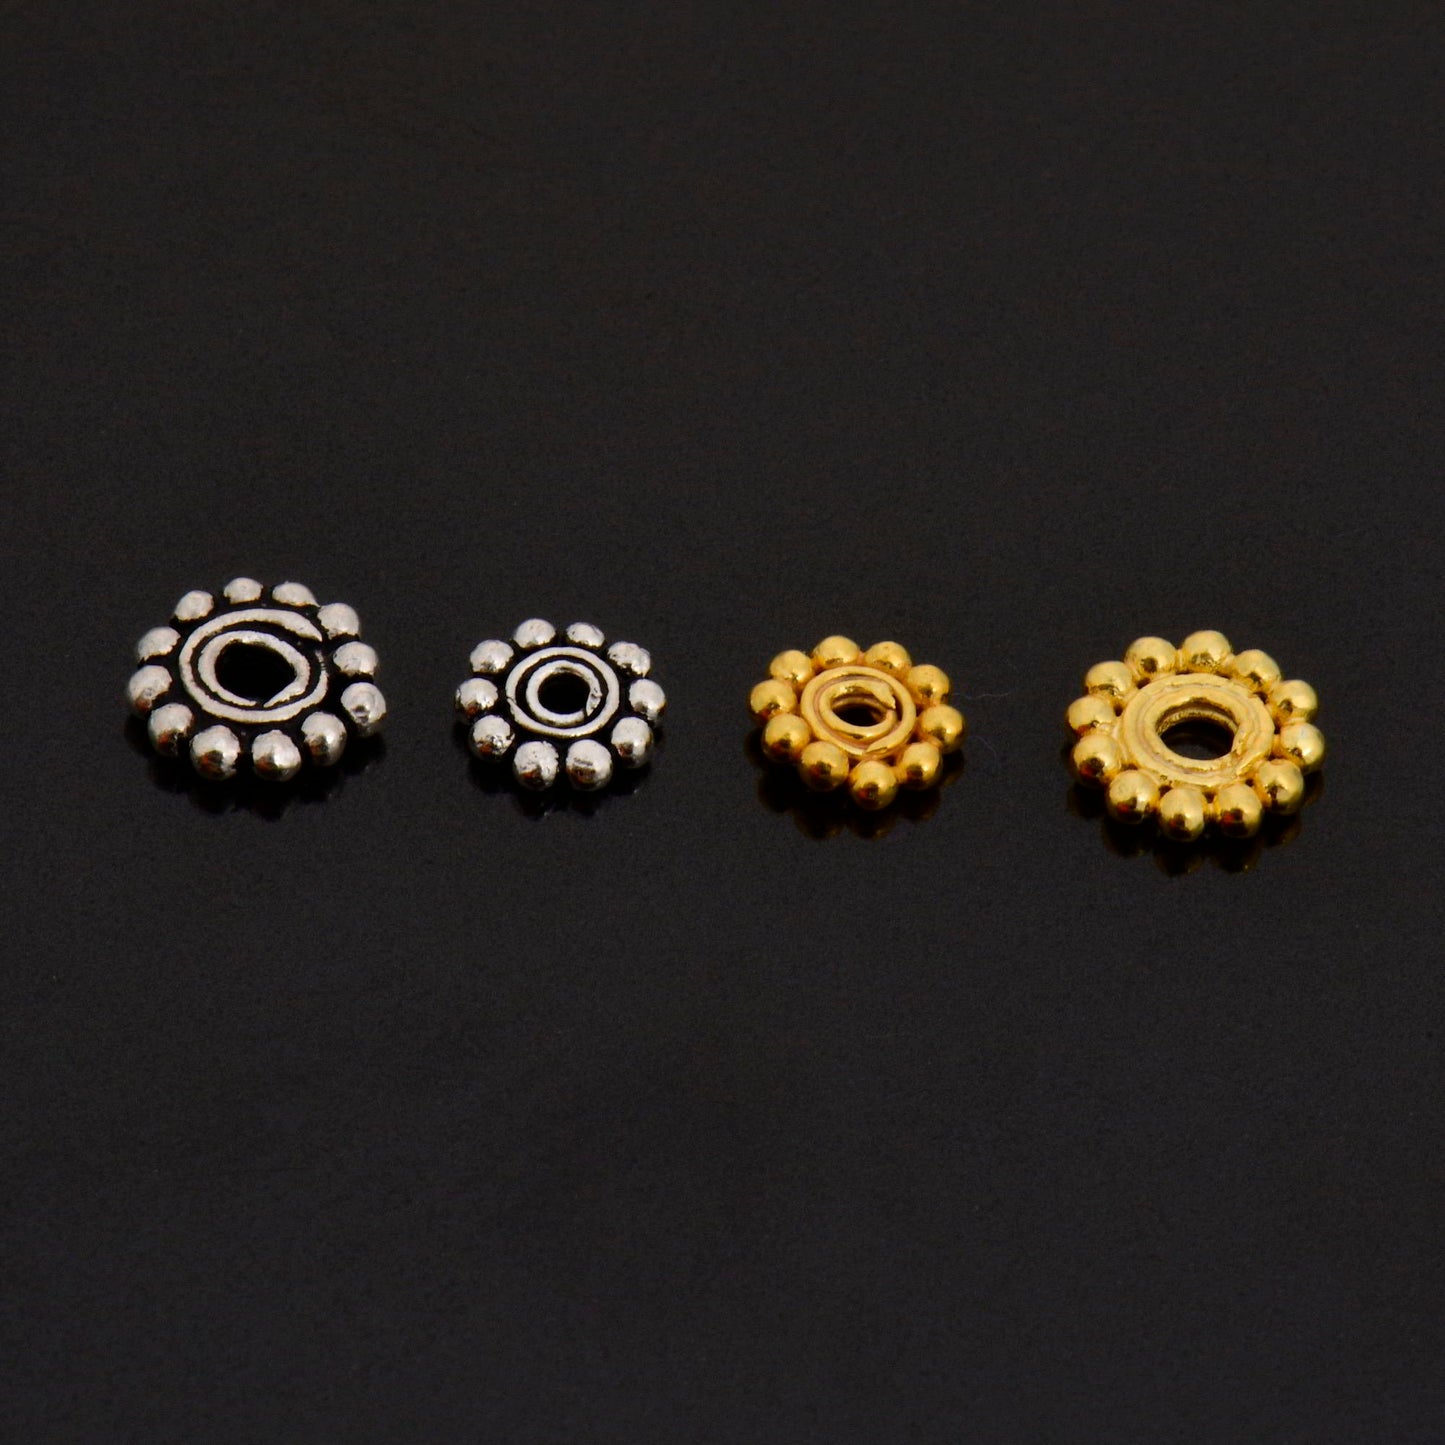 24K Gold Vermeil Separators, Handmade Silver Beads in 24K Gold, 925 Solid Silver Beads, Spacer Beads, Jewelry Supply, M/VM 130A-B